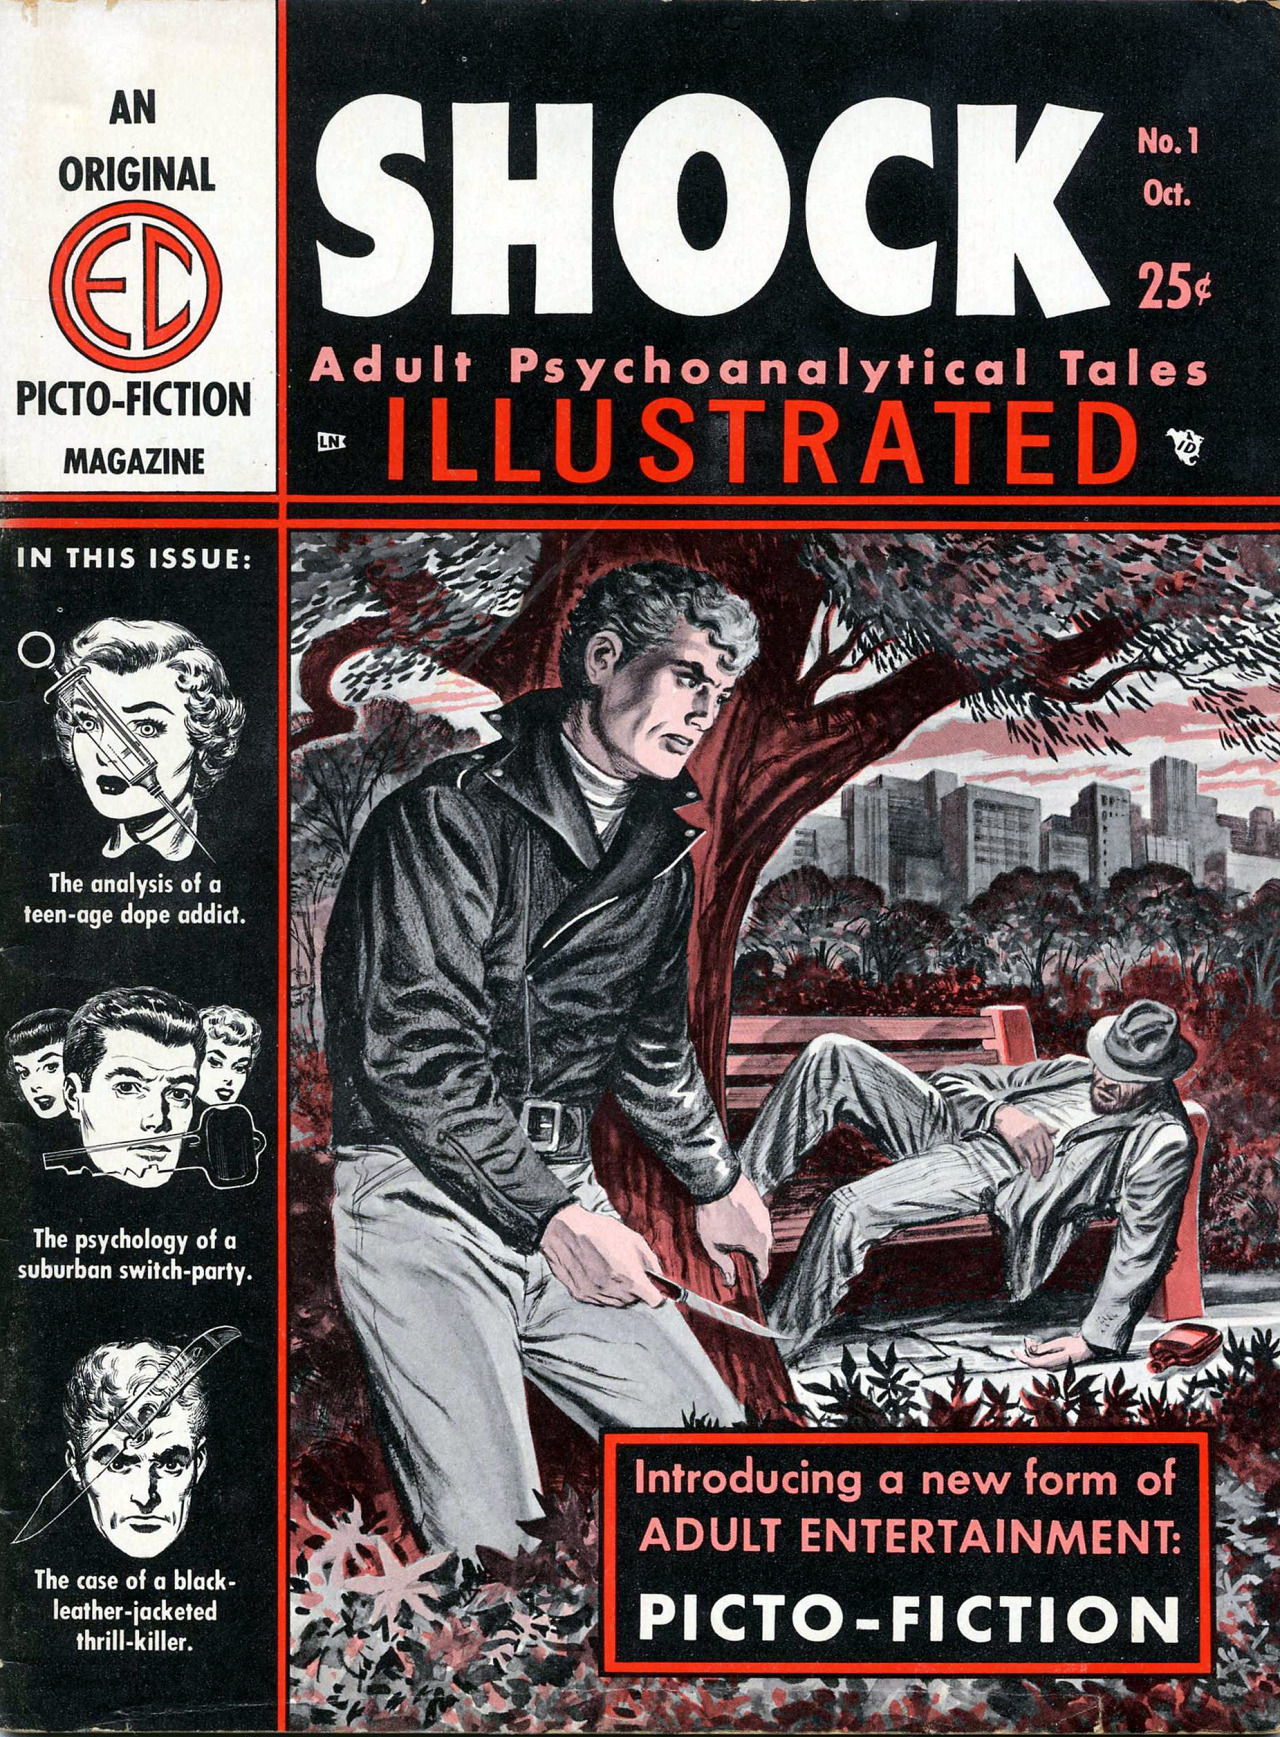 Shock Rock, Volume I by Jeff Gelb